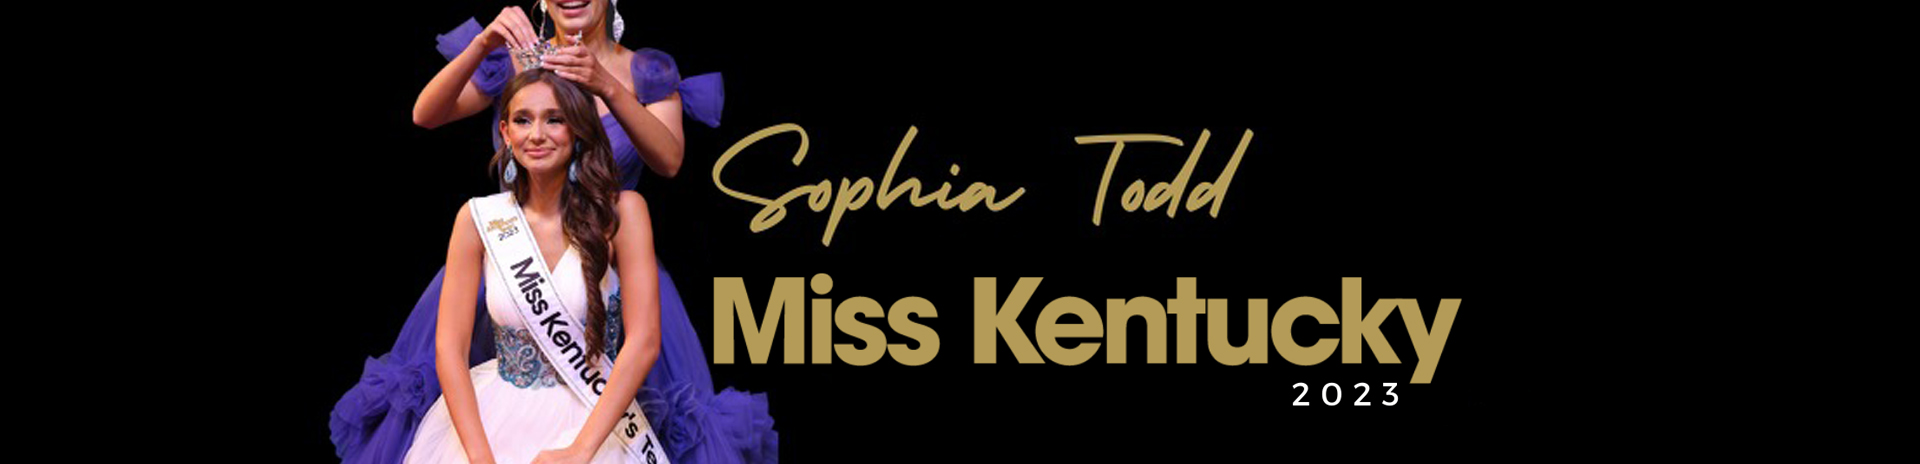 Miss Kentucky Teen 2023 Sophia Todd